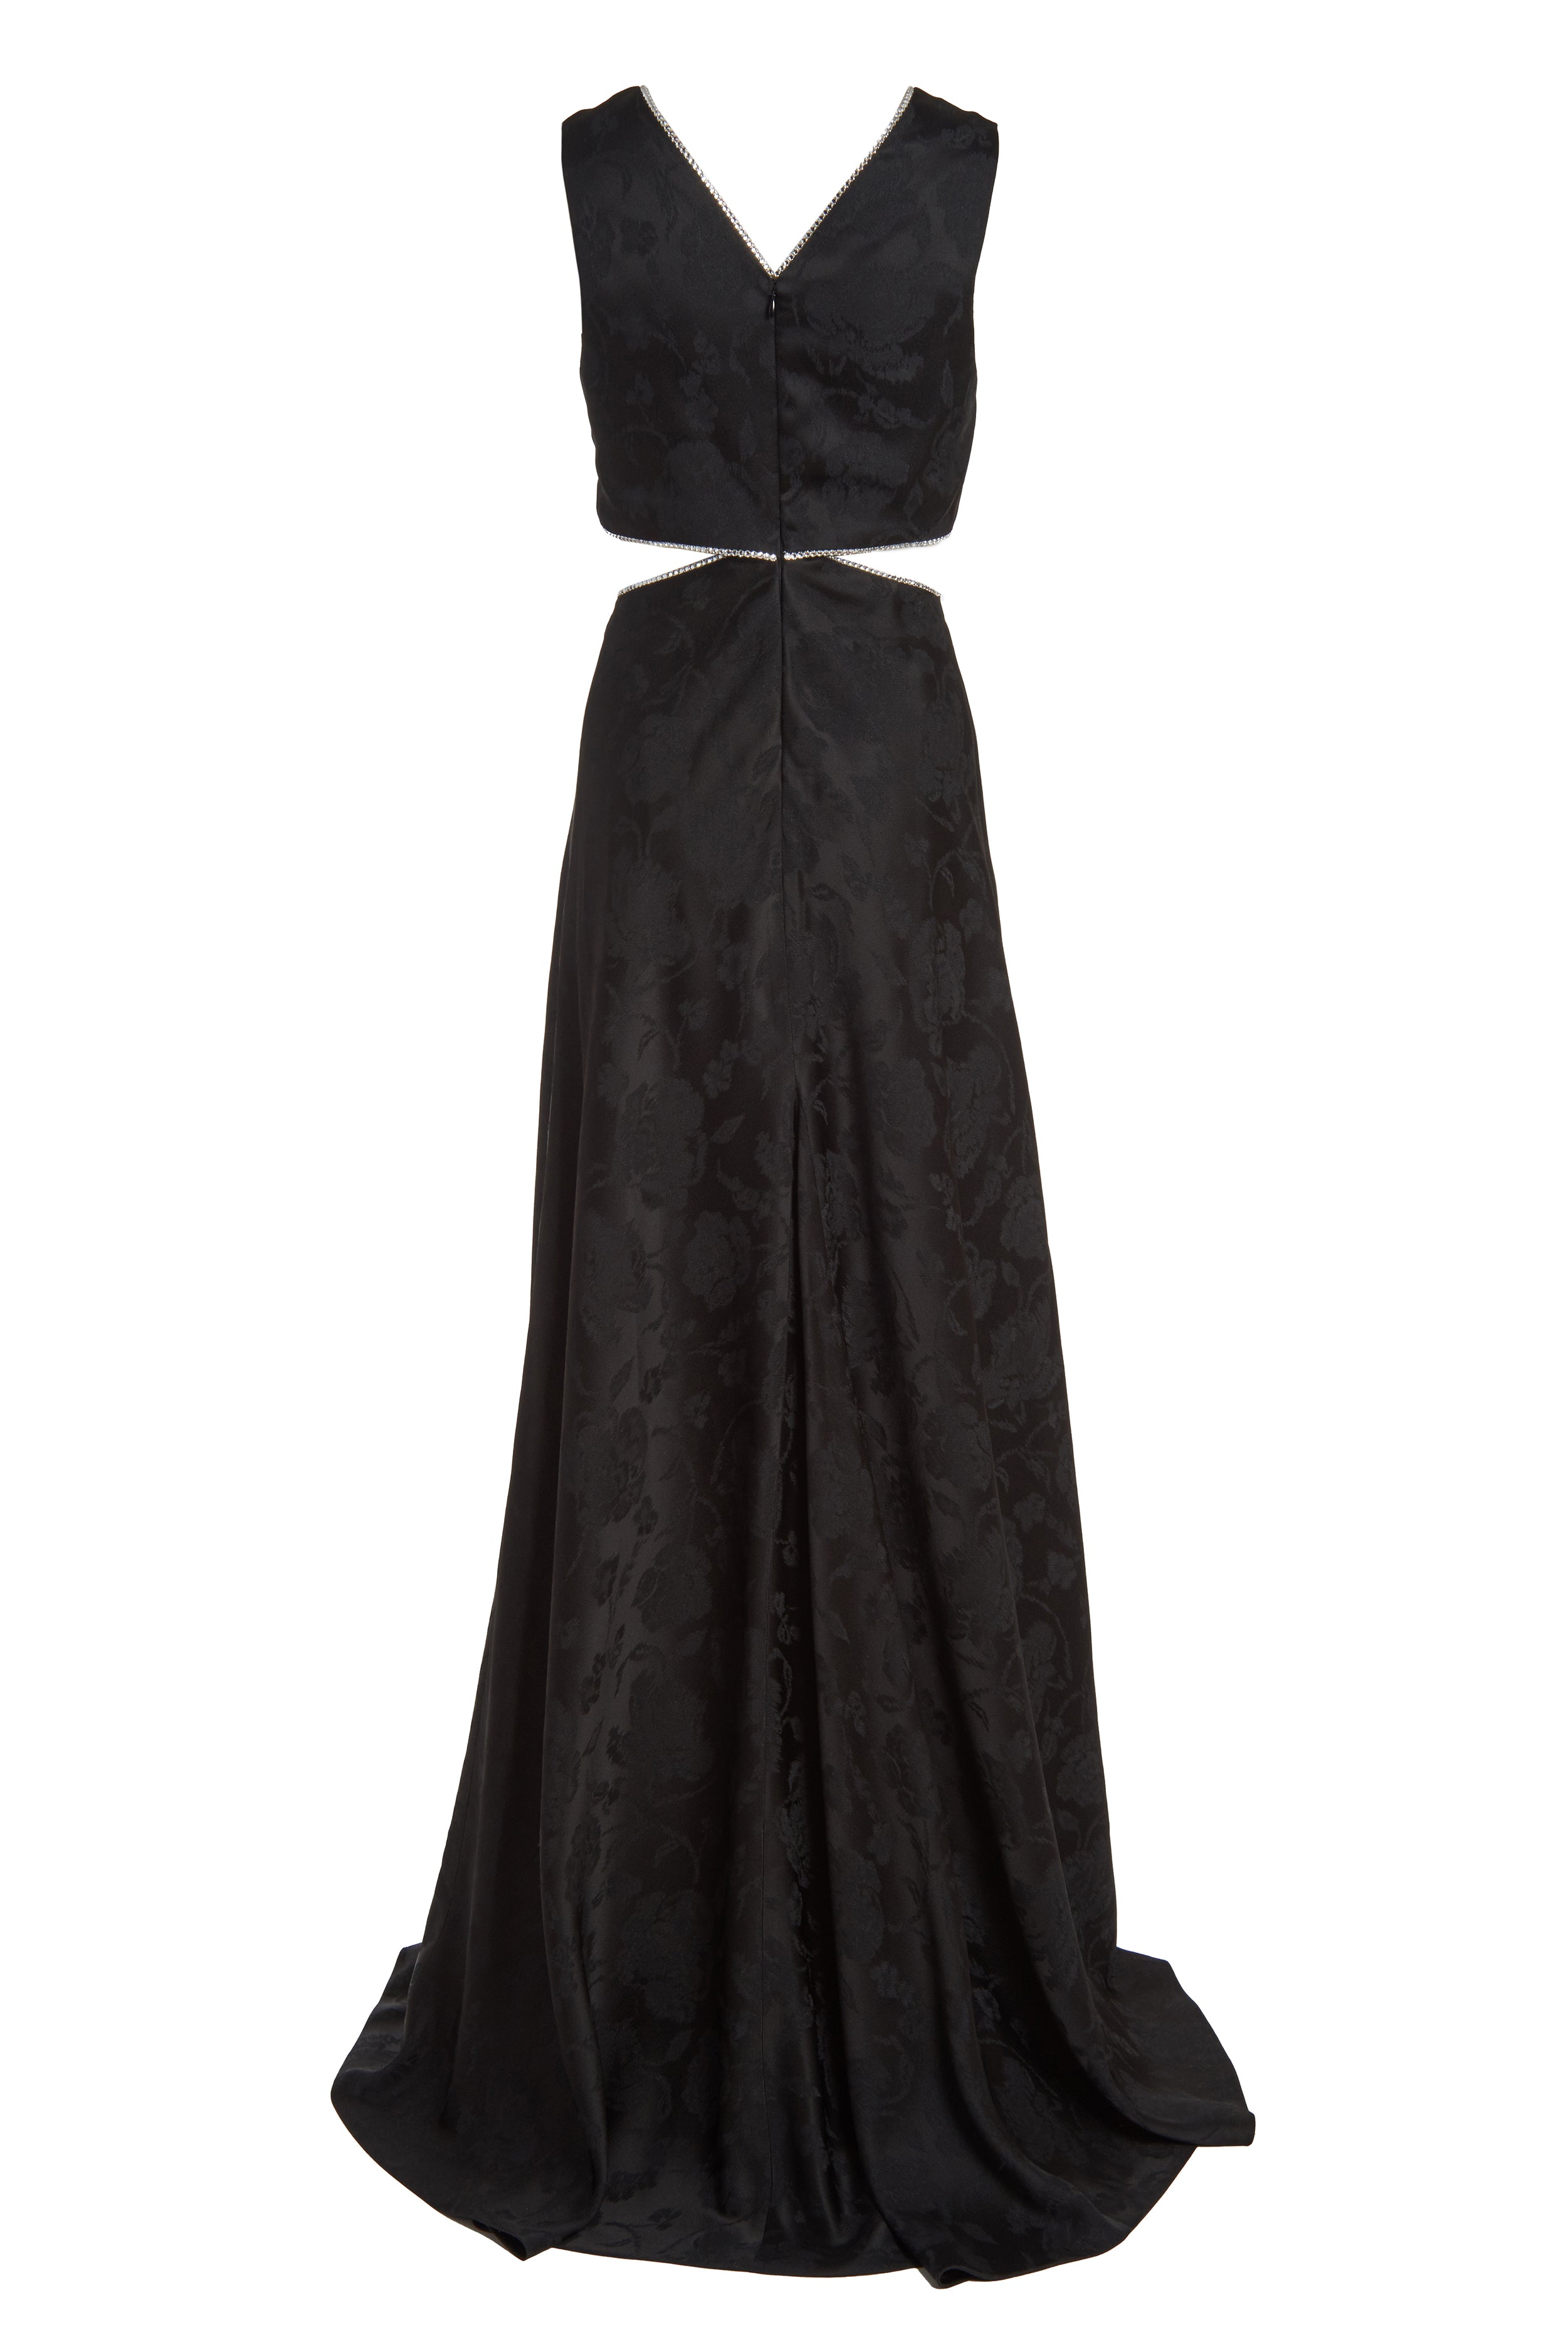 Pyrra Black Jacquard Cut Out Gown with Swarovski Crystal Trim